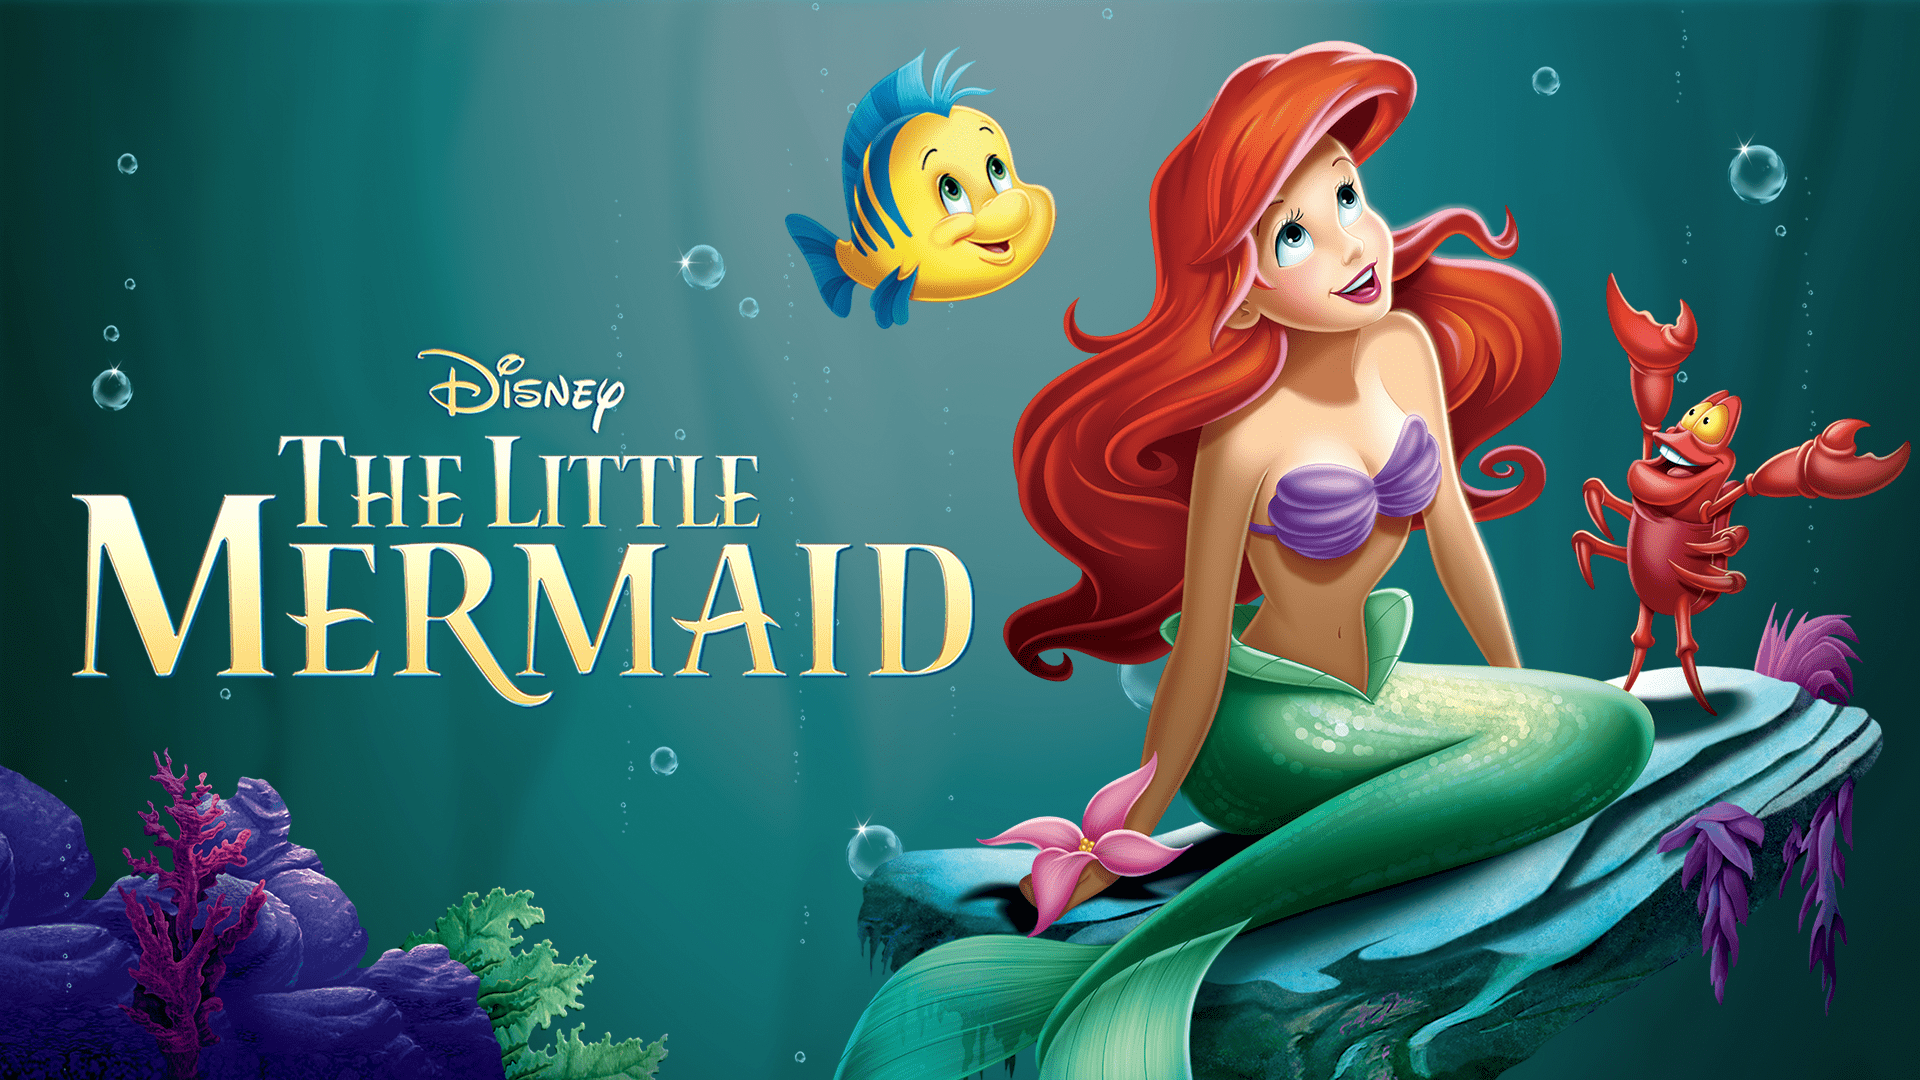 The Mermaid Full Movie In English